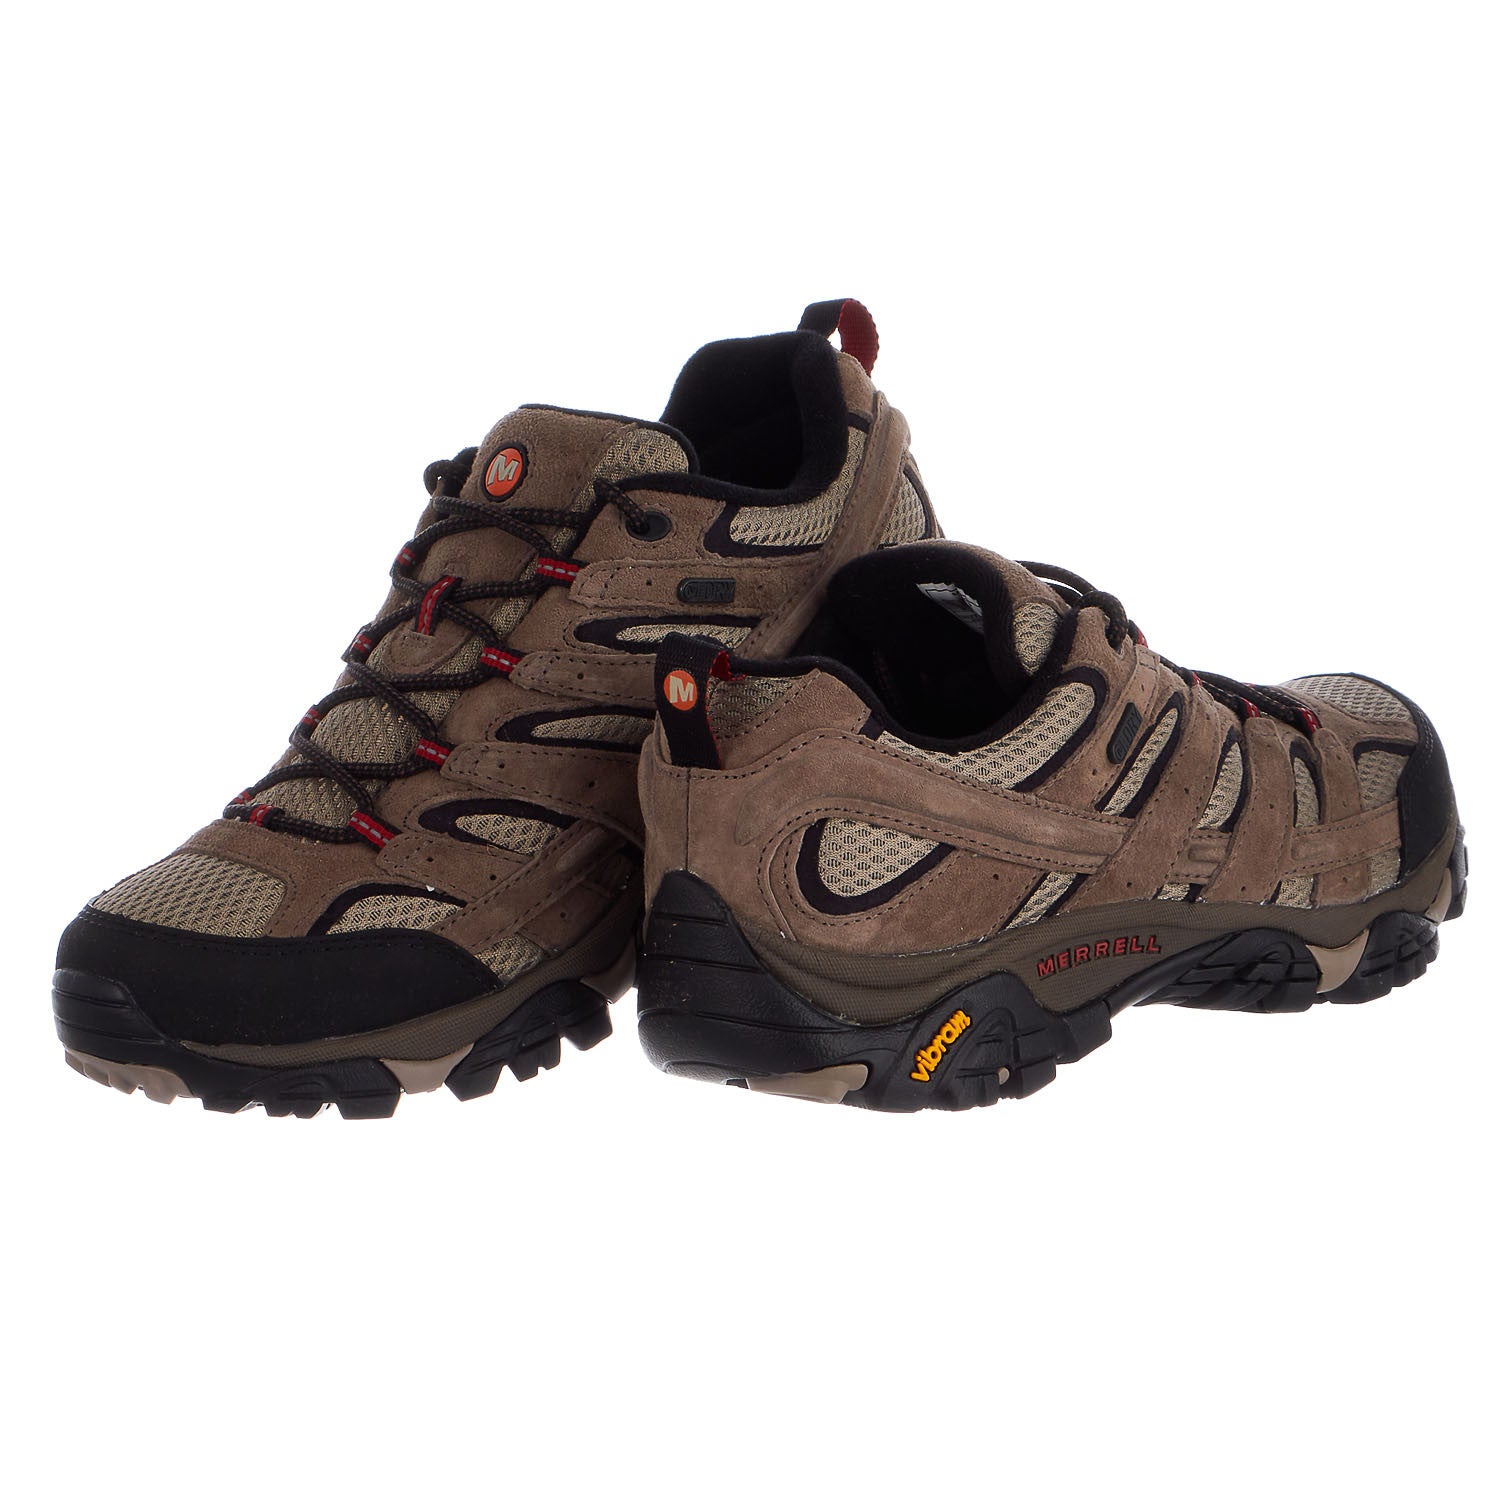 Merrell J06026 Women's MOAB 2 Waterproof Granite Hiking Shoes